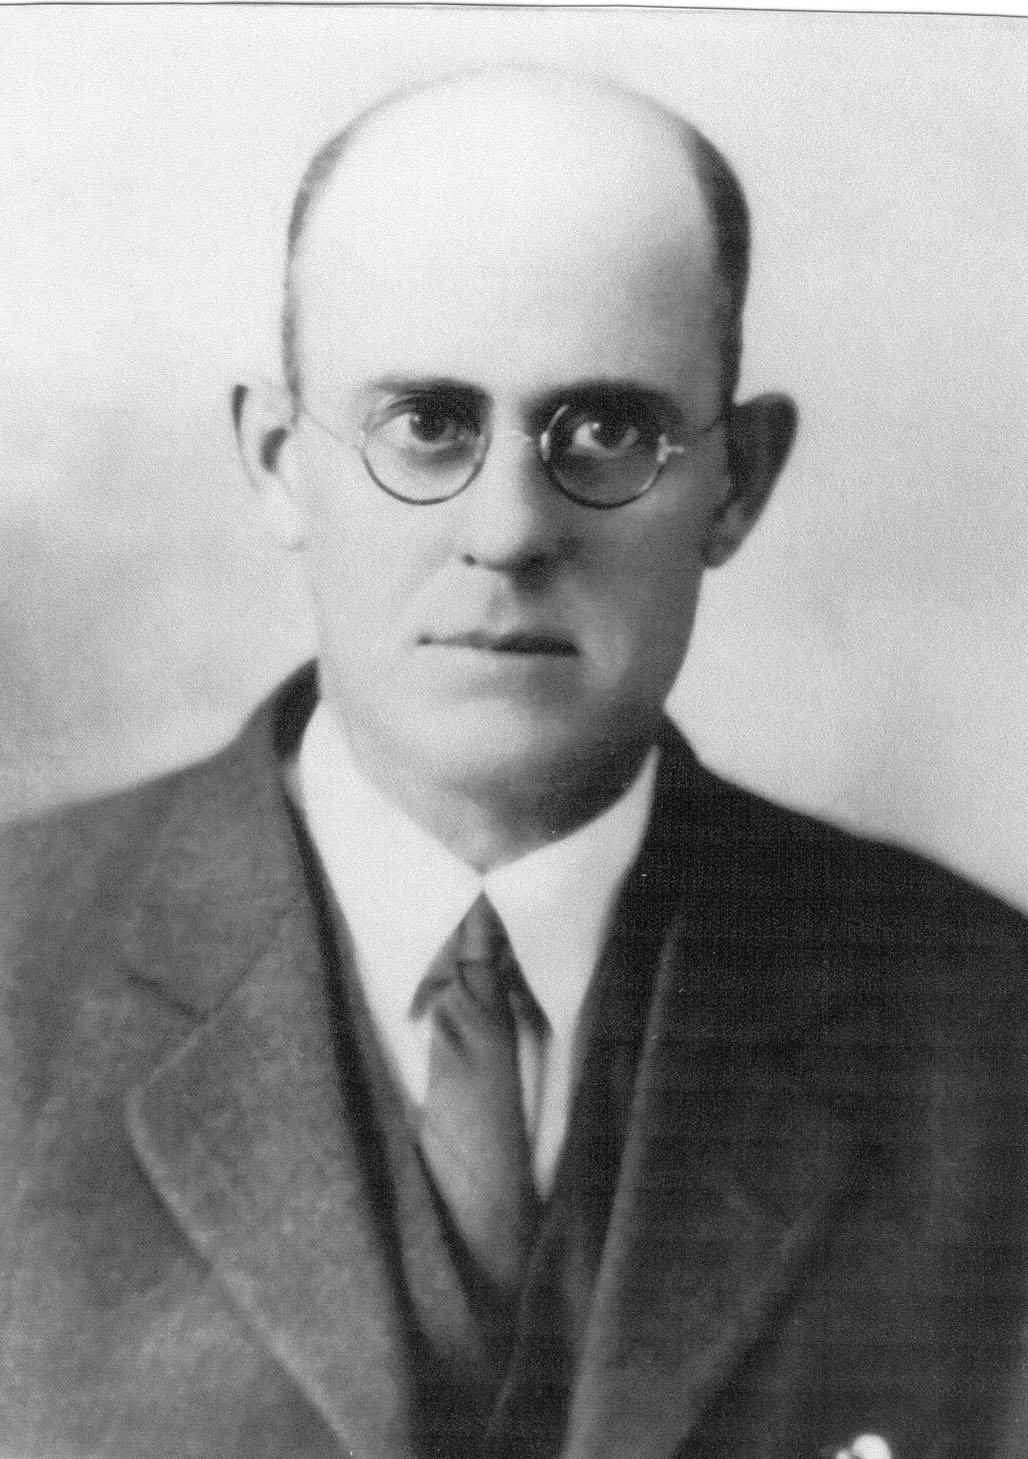 Federal Prohibition Agent James C. Capen | United States Department of the Treasury - Internal Revenue Service - Bureau of Prohibition, U.S. Government